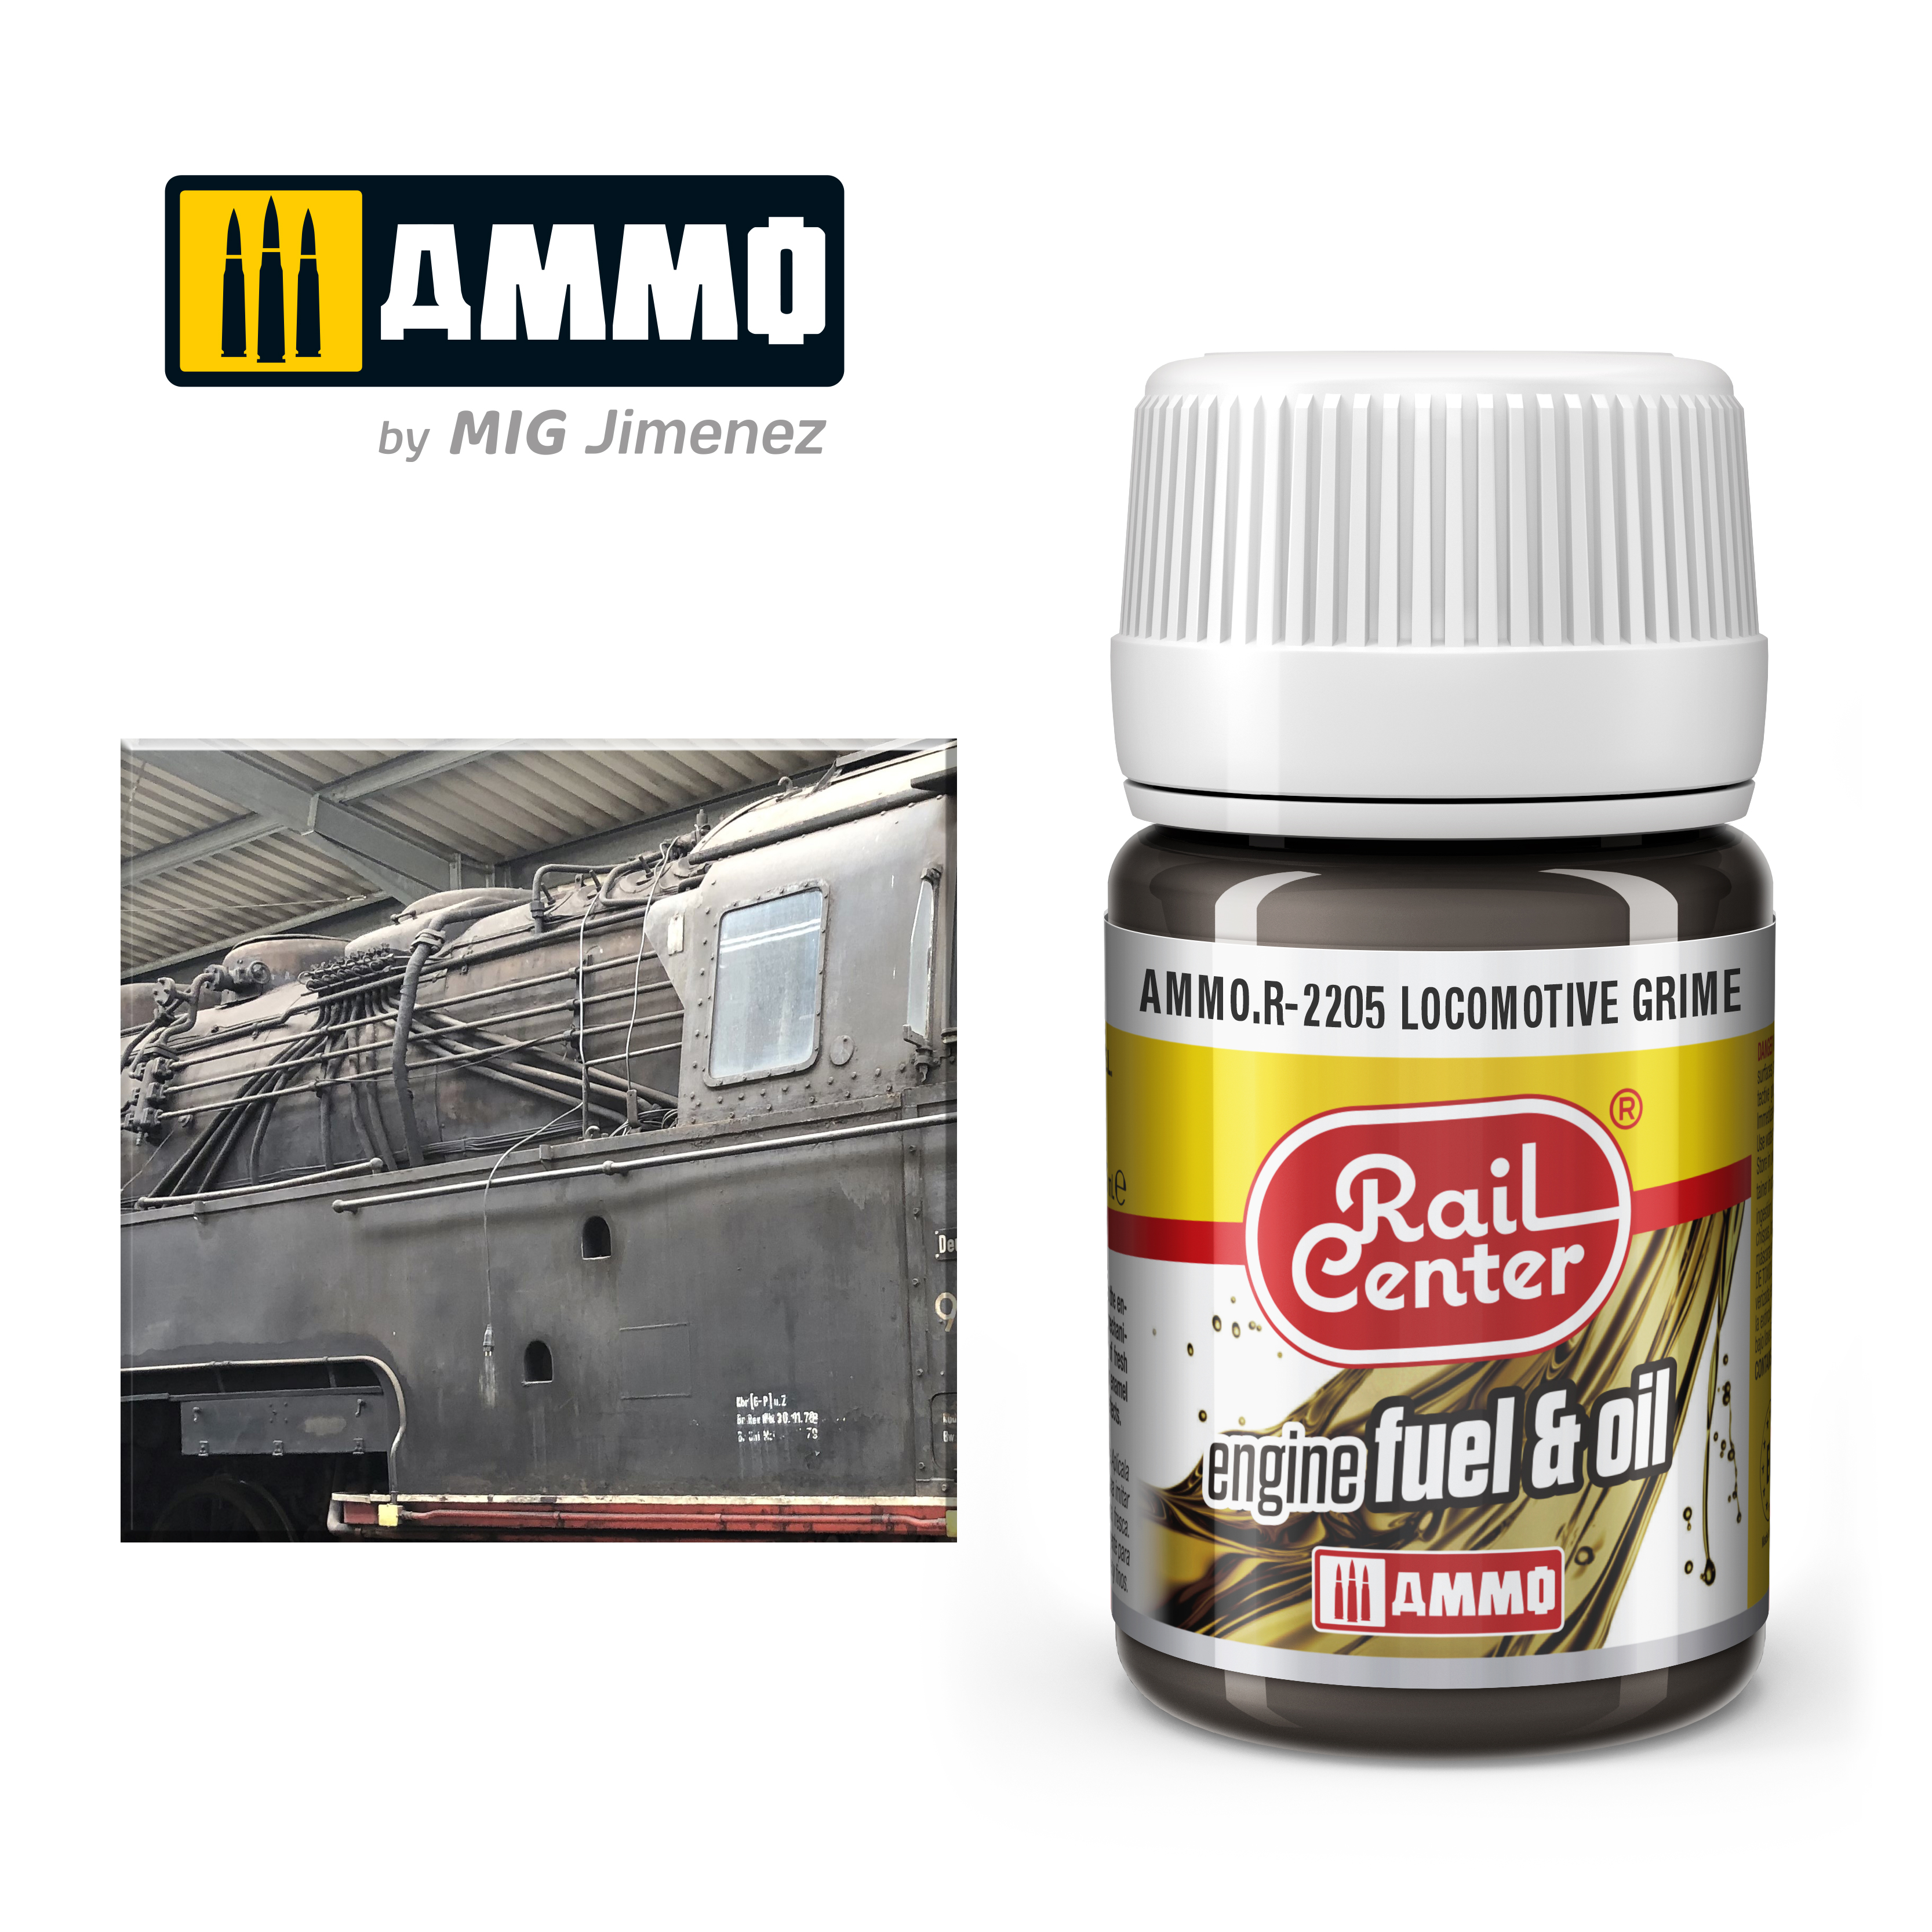 AMMO RailCenter Engine Fuel and Oil AMMO.R-2205 LOCOMOTIVE GRIME - 35ml Bottle